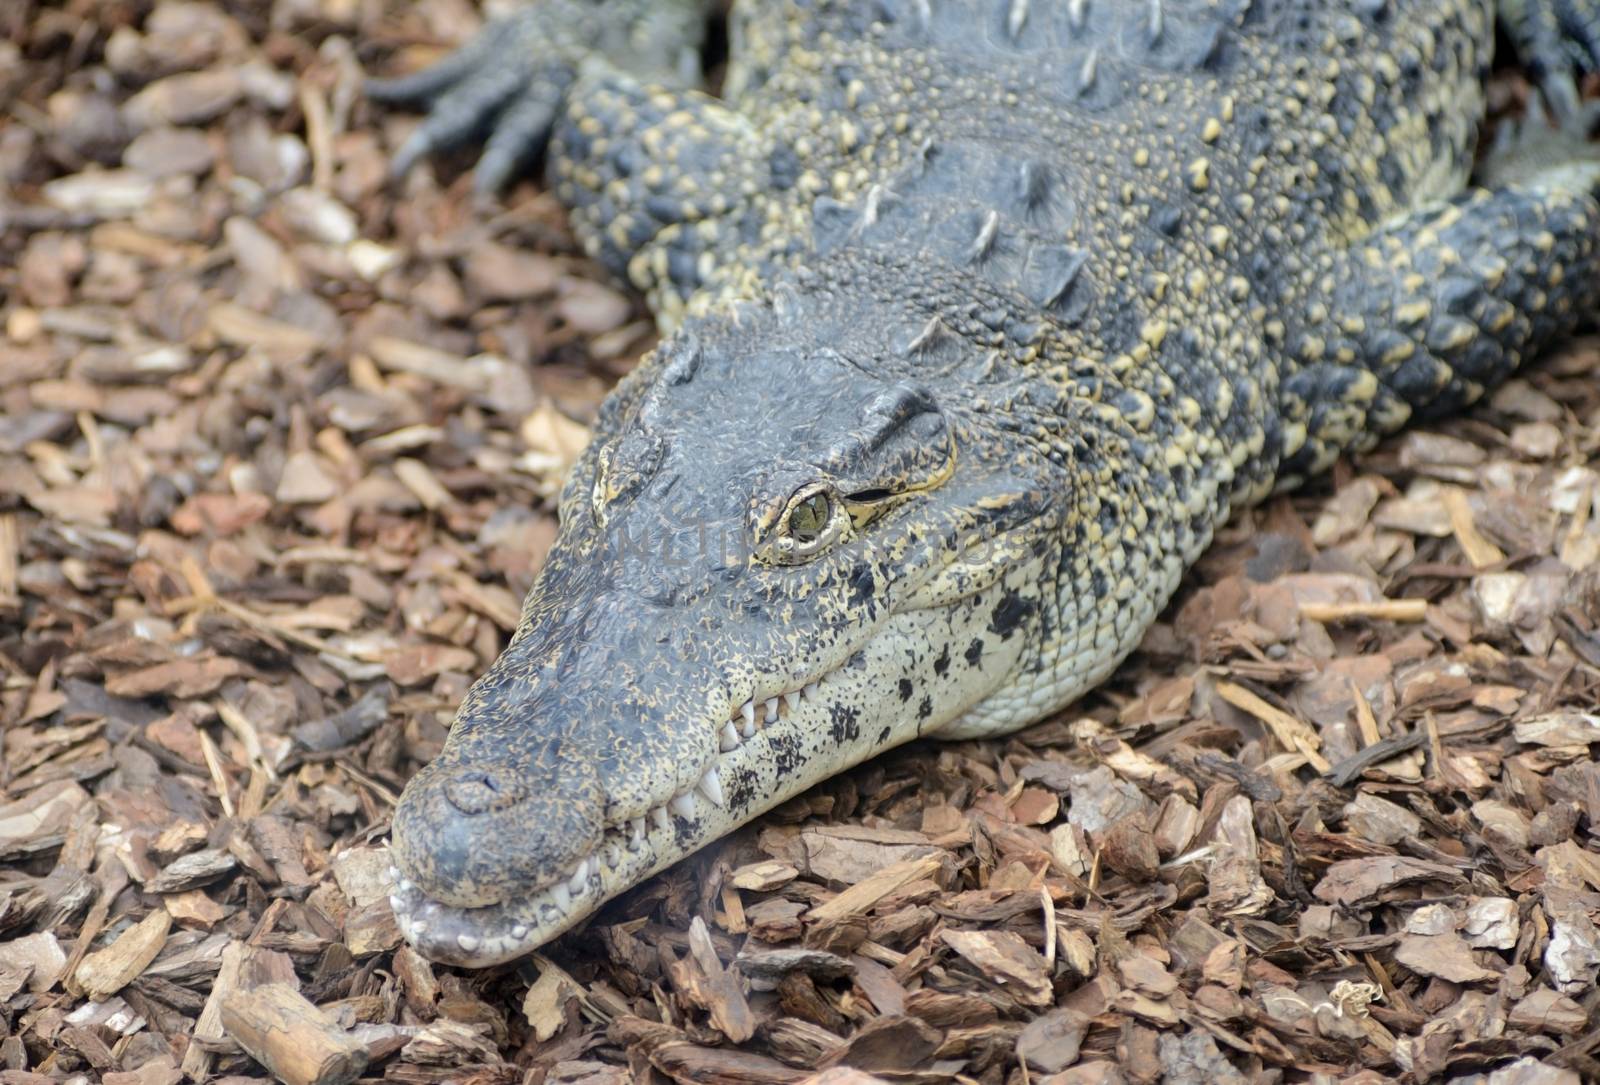 Cuban crocodile head closeup showing teeth and eye detail